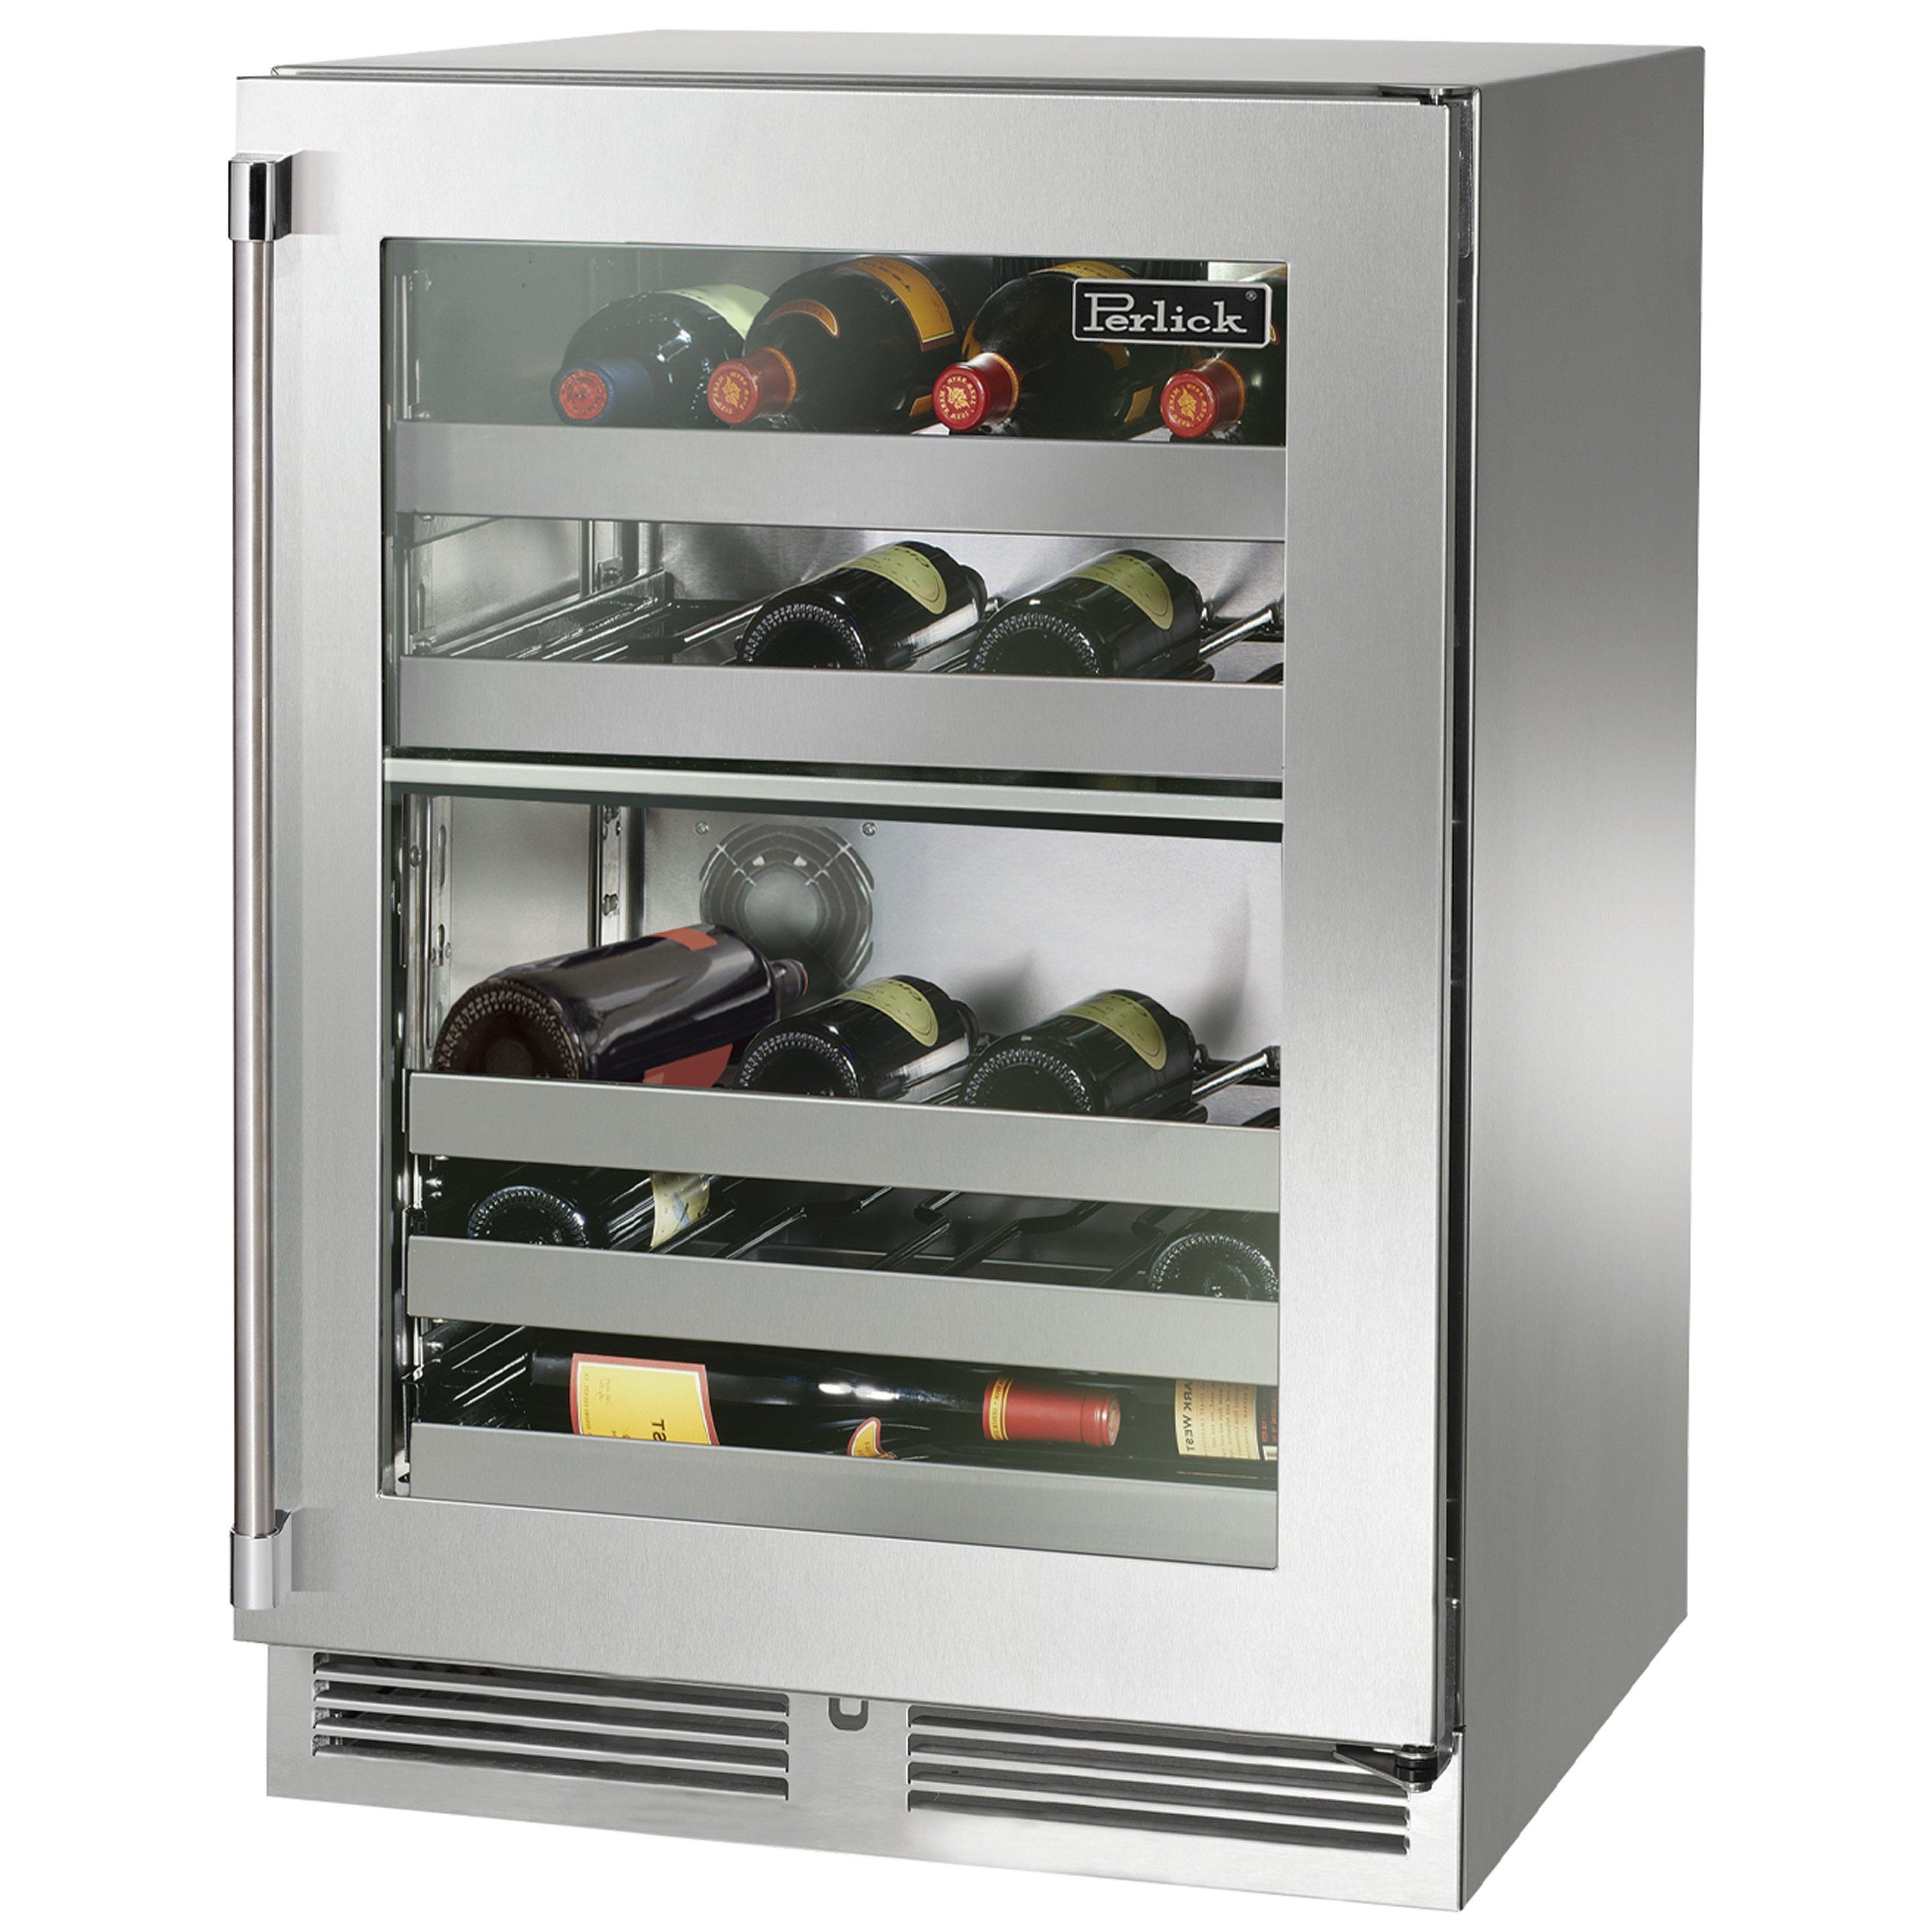 Perlick 24 Signature Series Indoor Dual-Zone Freezer/Refrigerator Drawers Stainless Steel